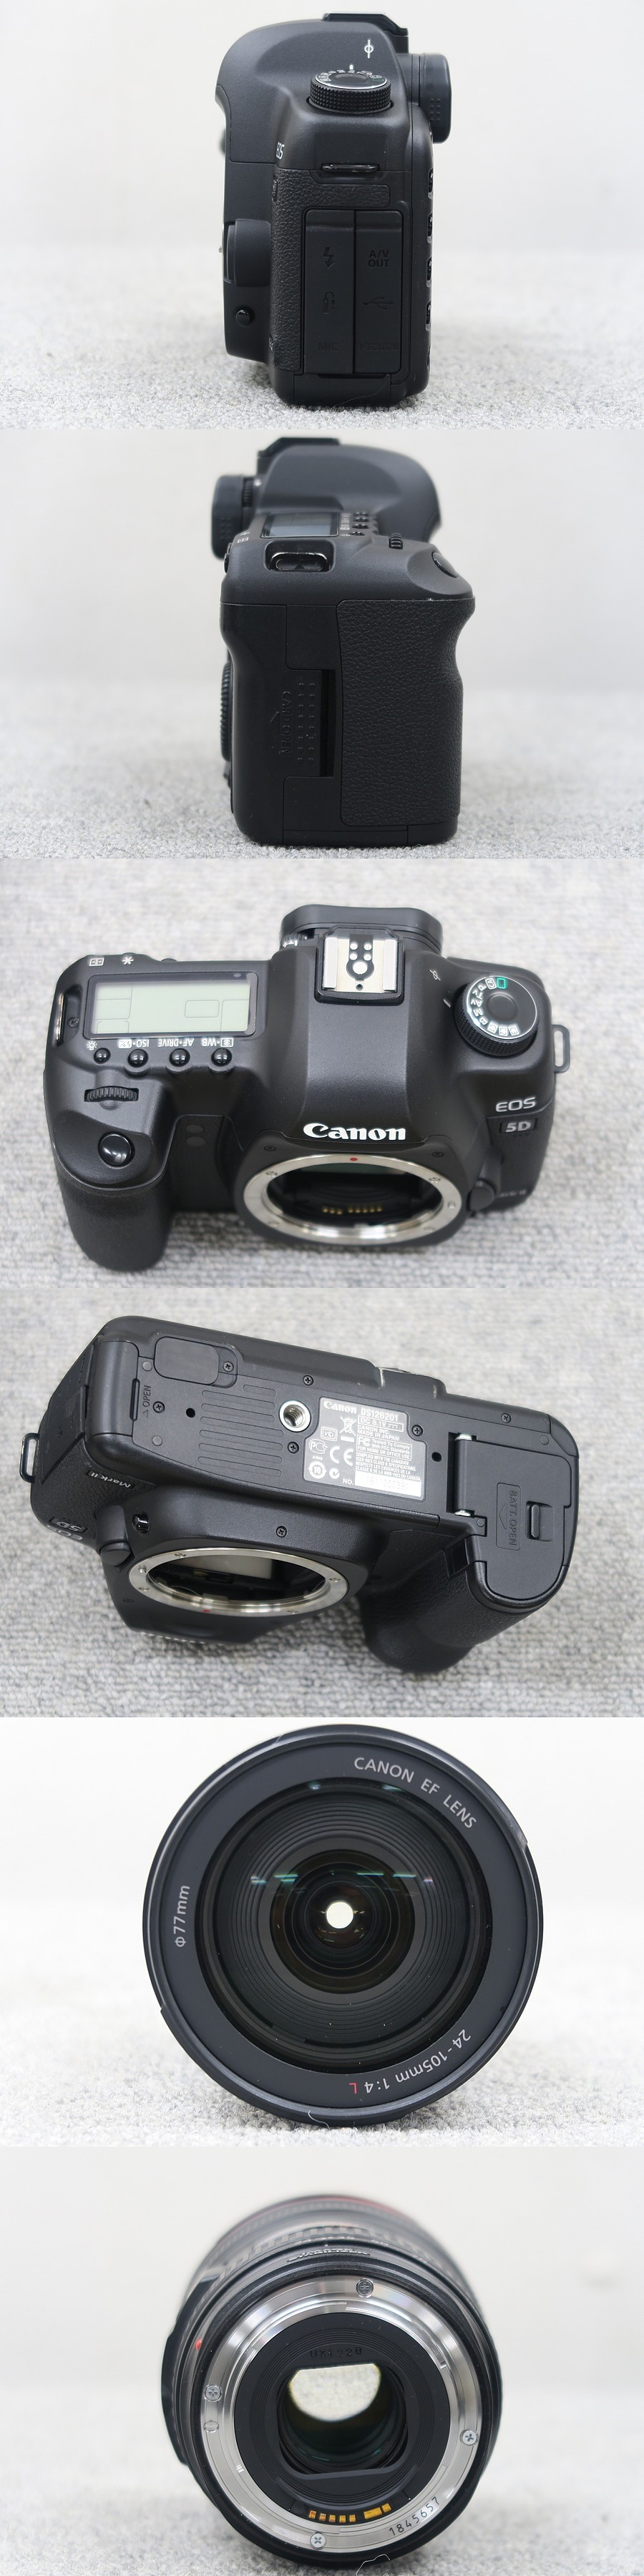 Canon EOS 5D Mark II EF24-105L IS USM レンズキット カメラ 元箱付